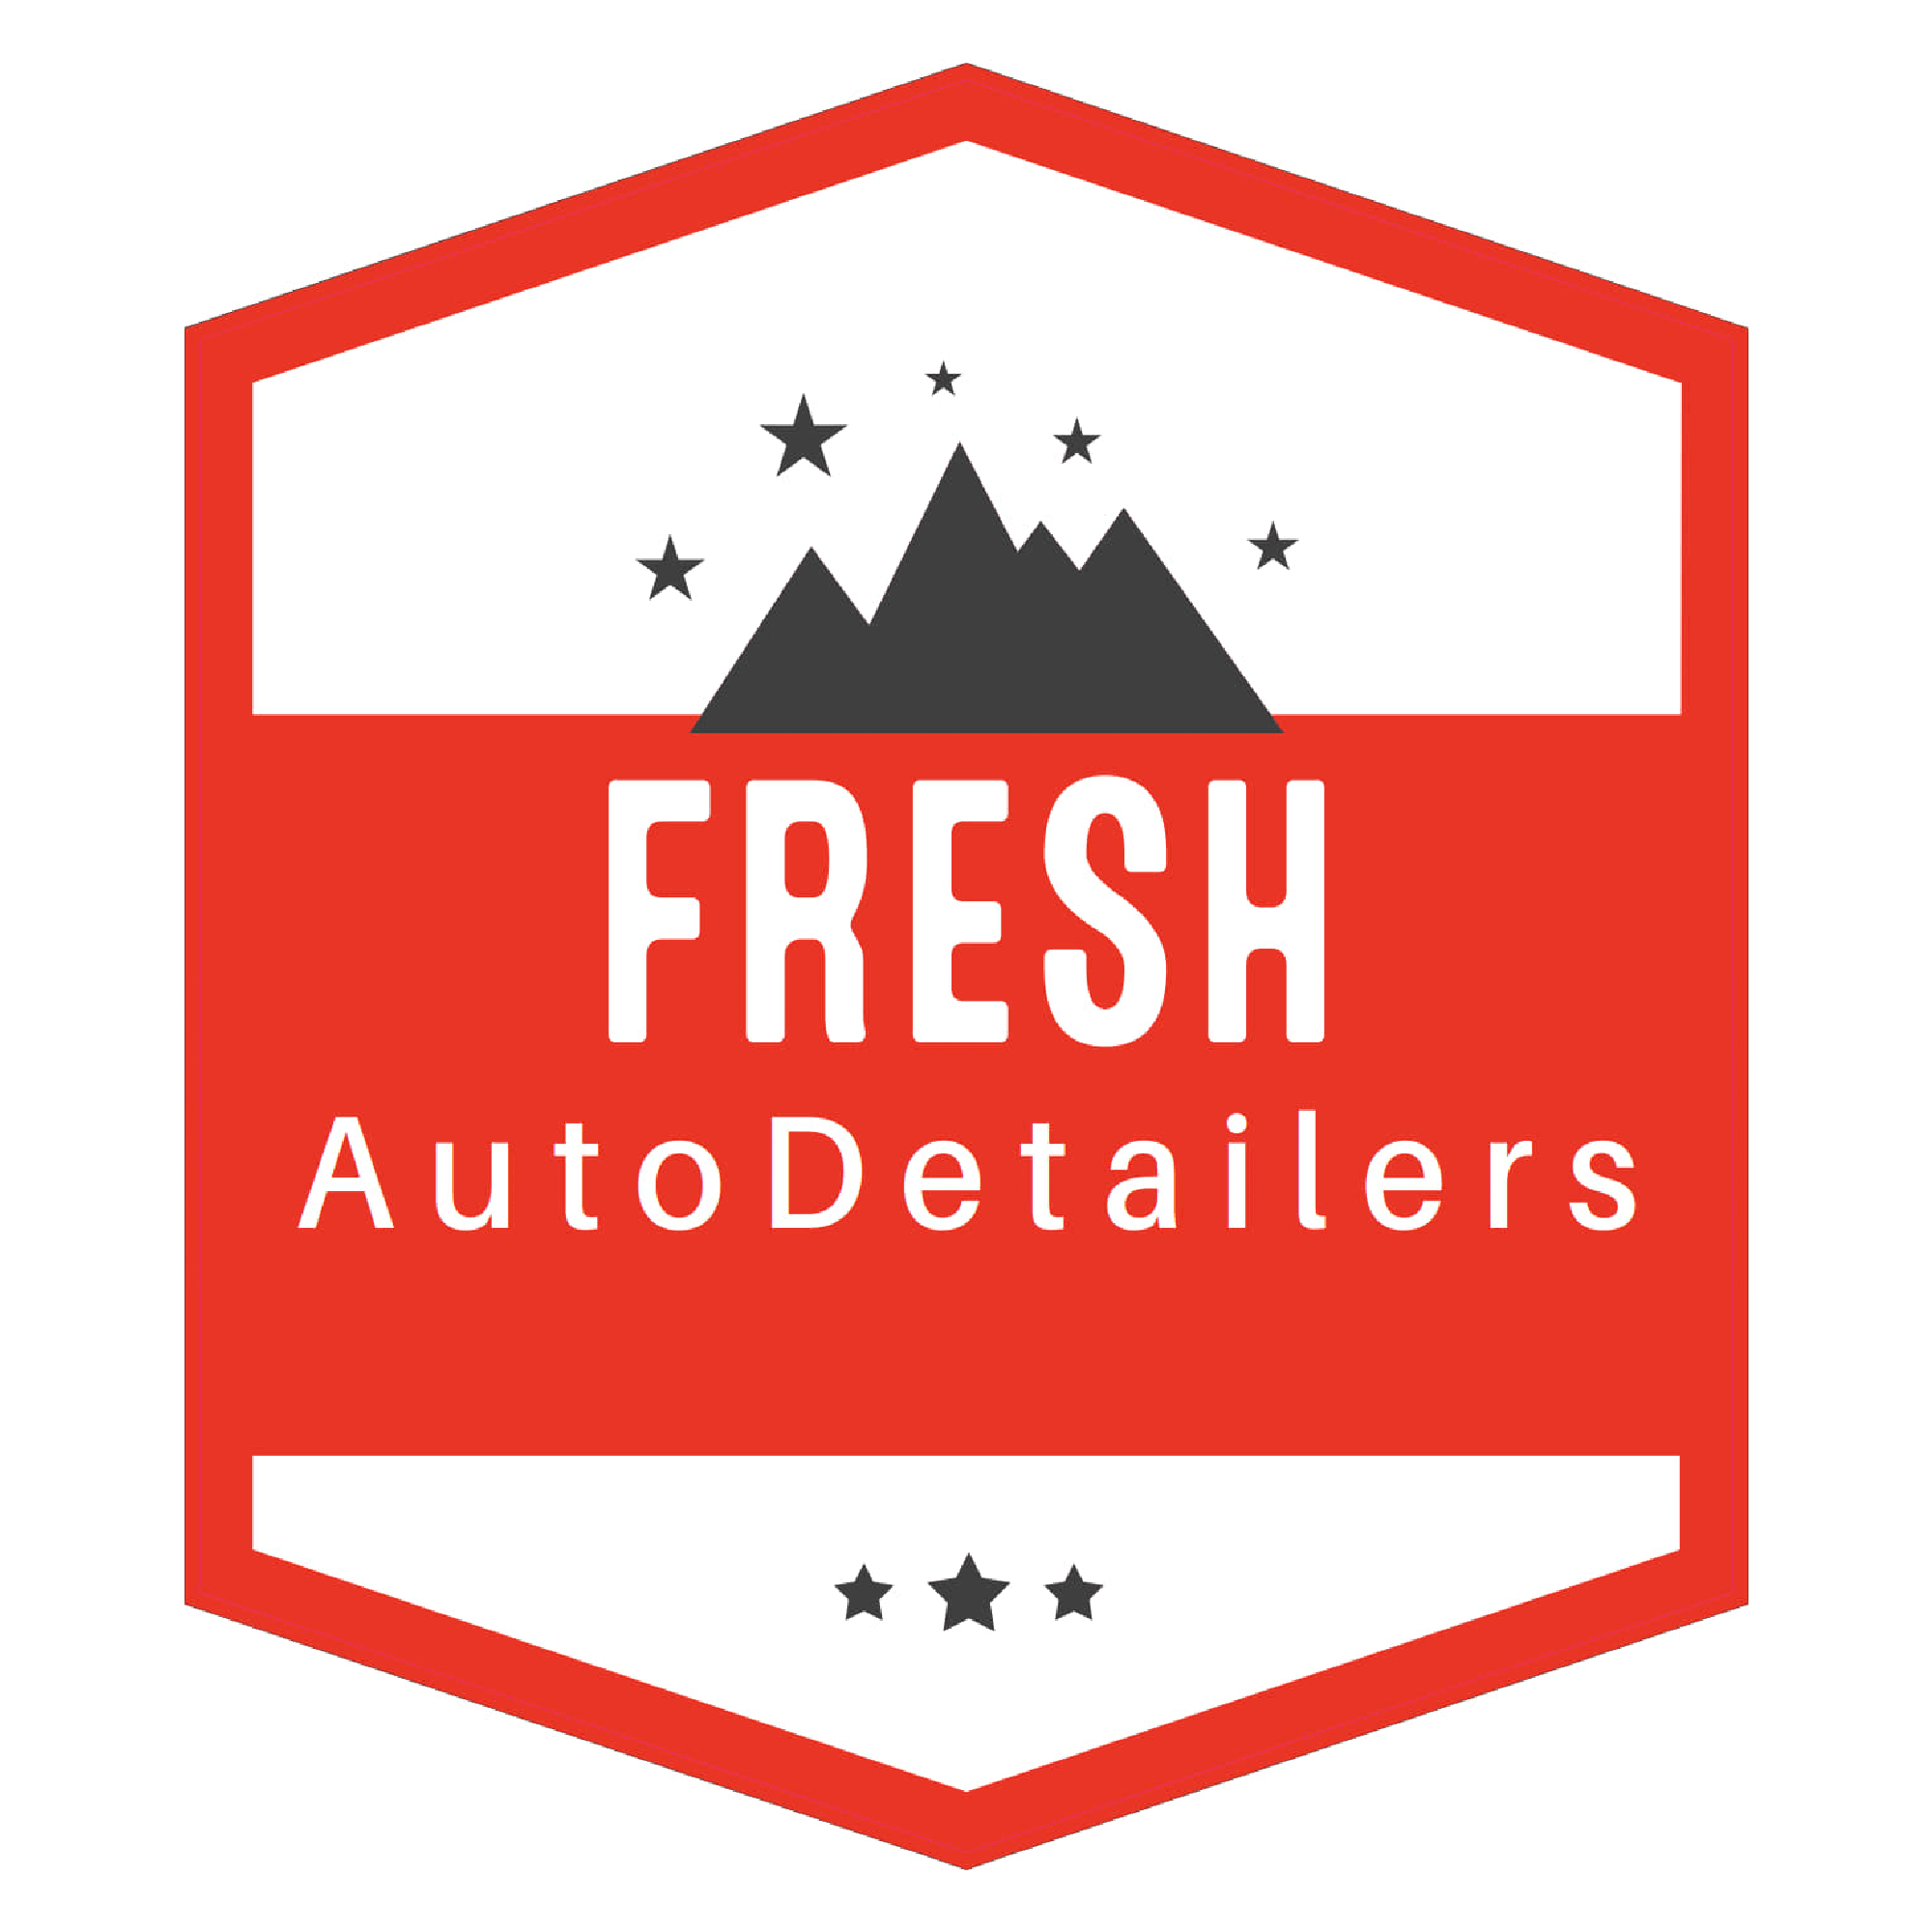 Fresh Auto Detailers